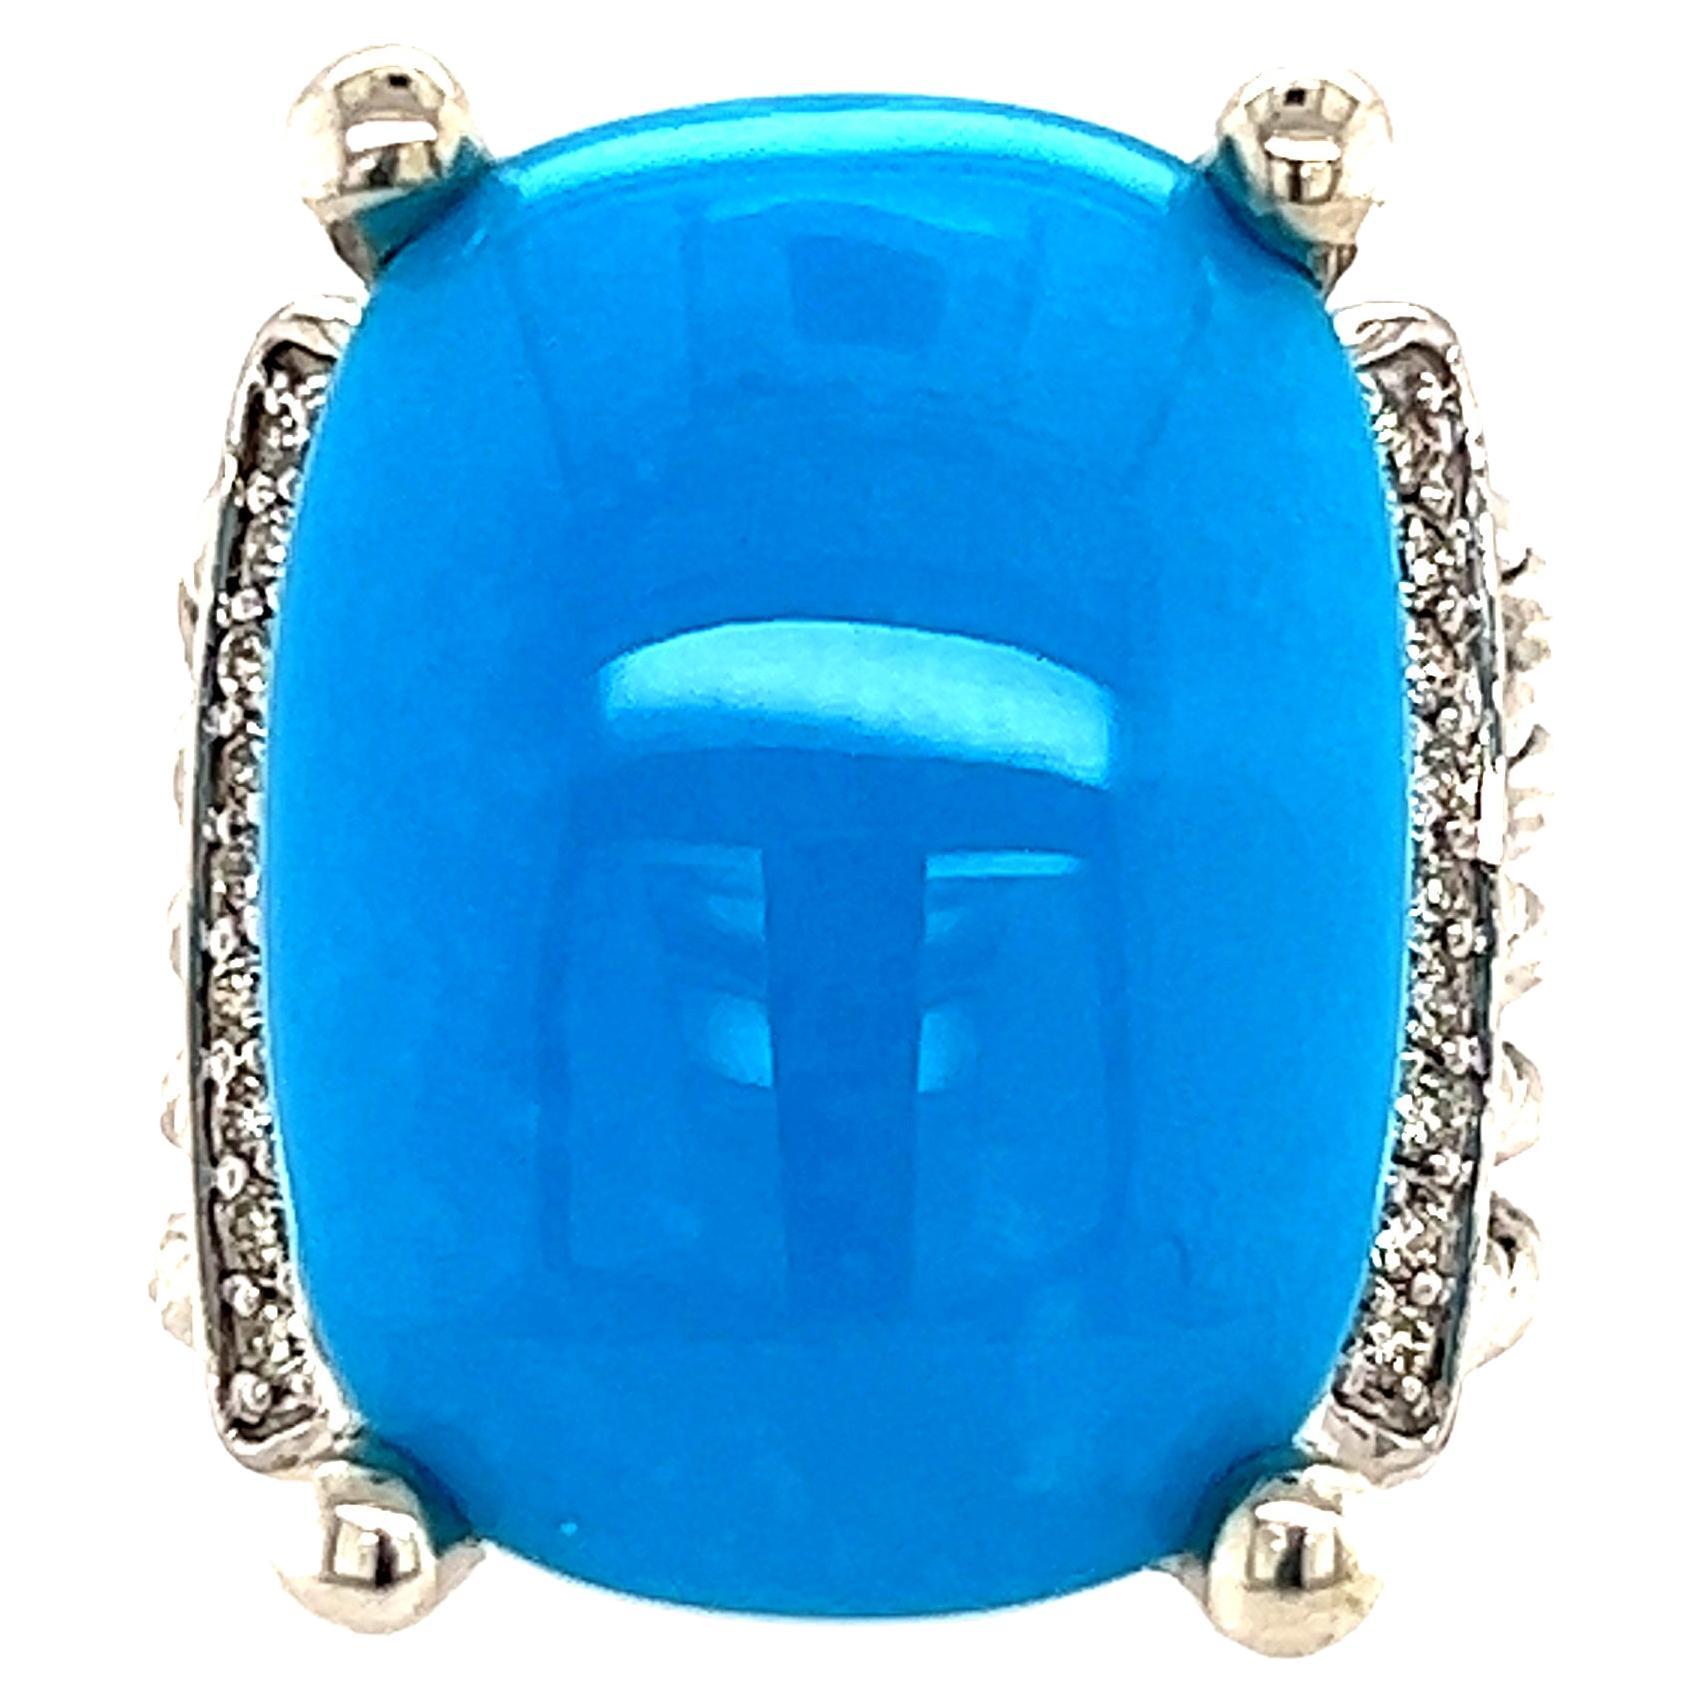 David Yurman Estate Turquoise Diamond Ring Sterling Silver 13.13 TCW